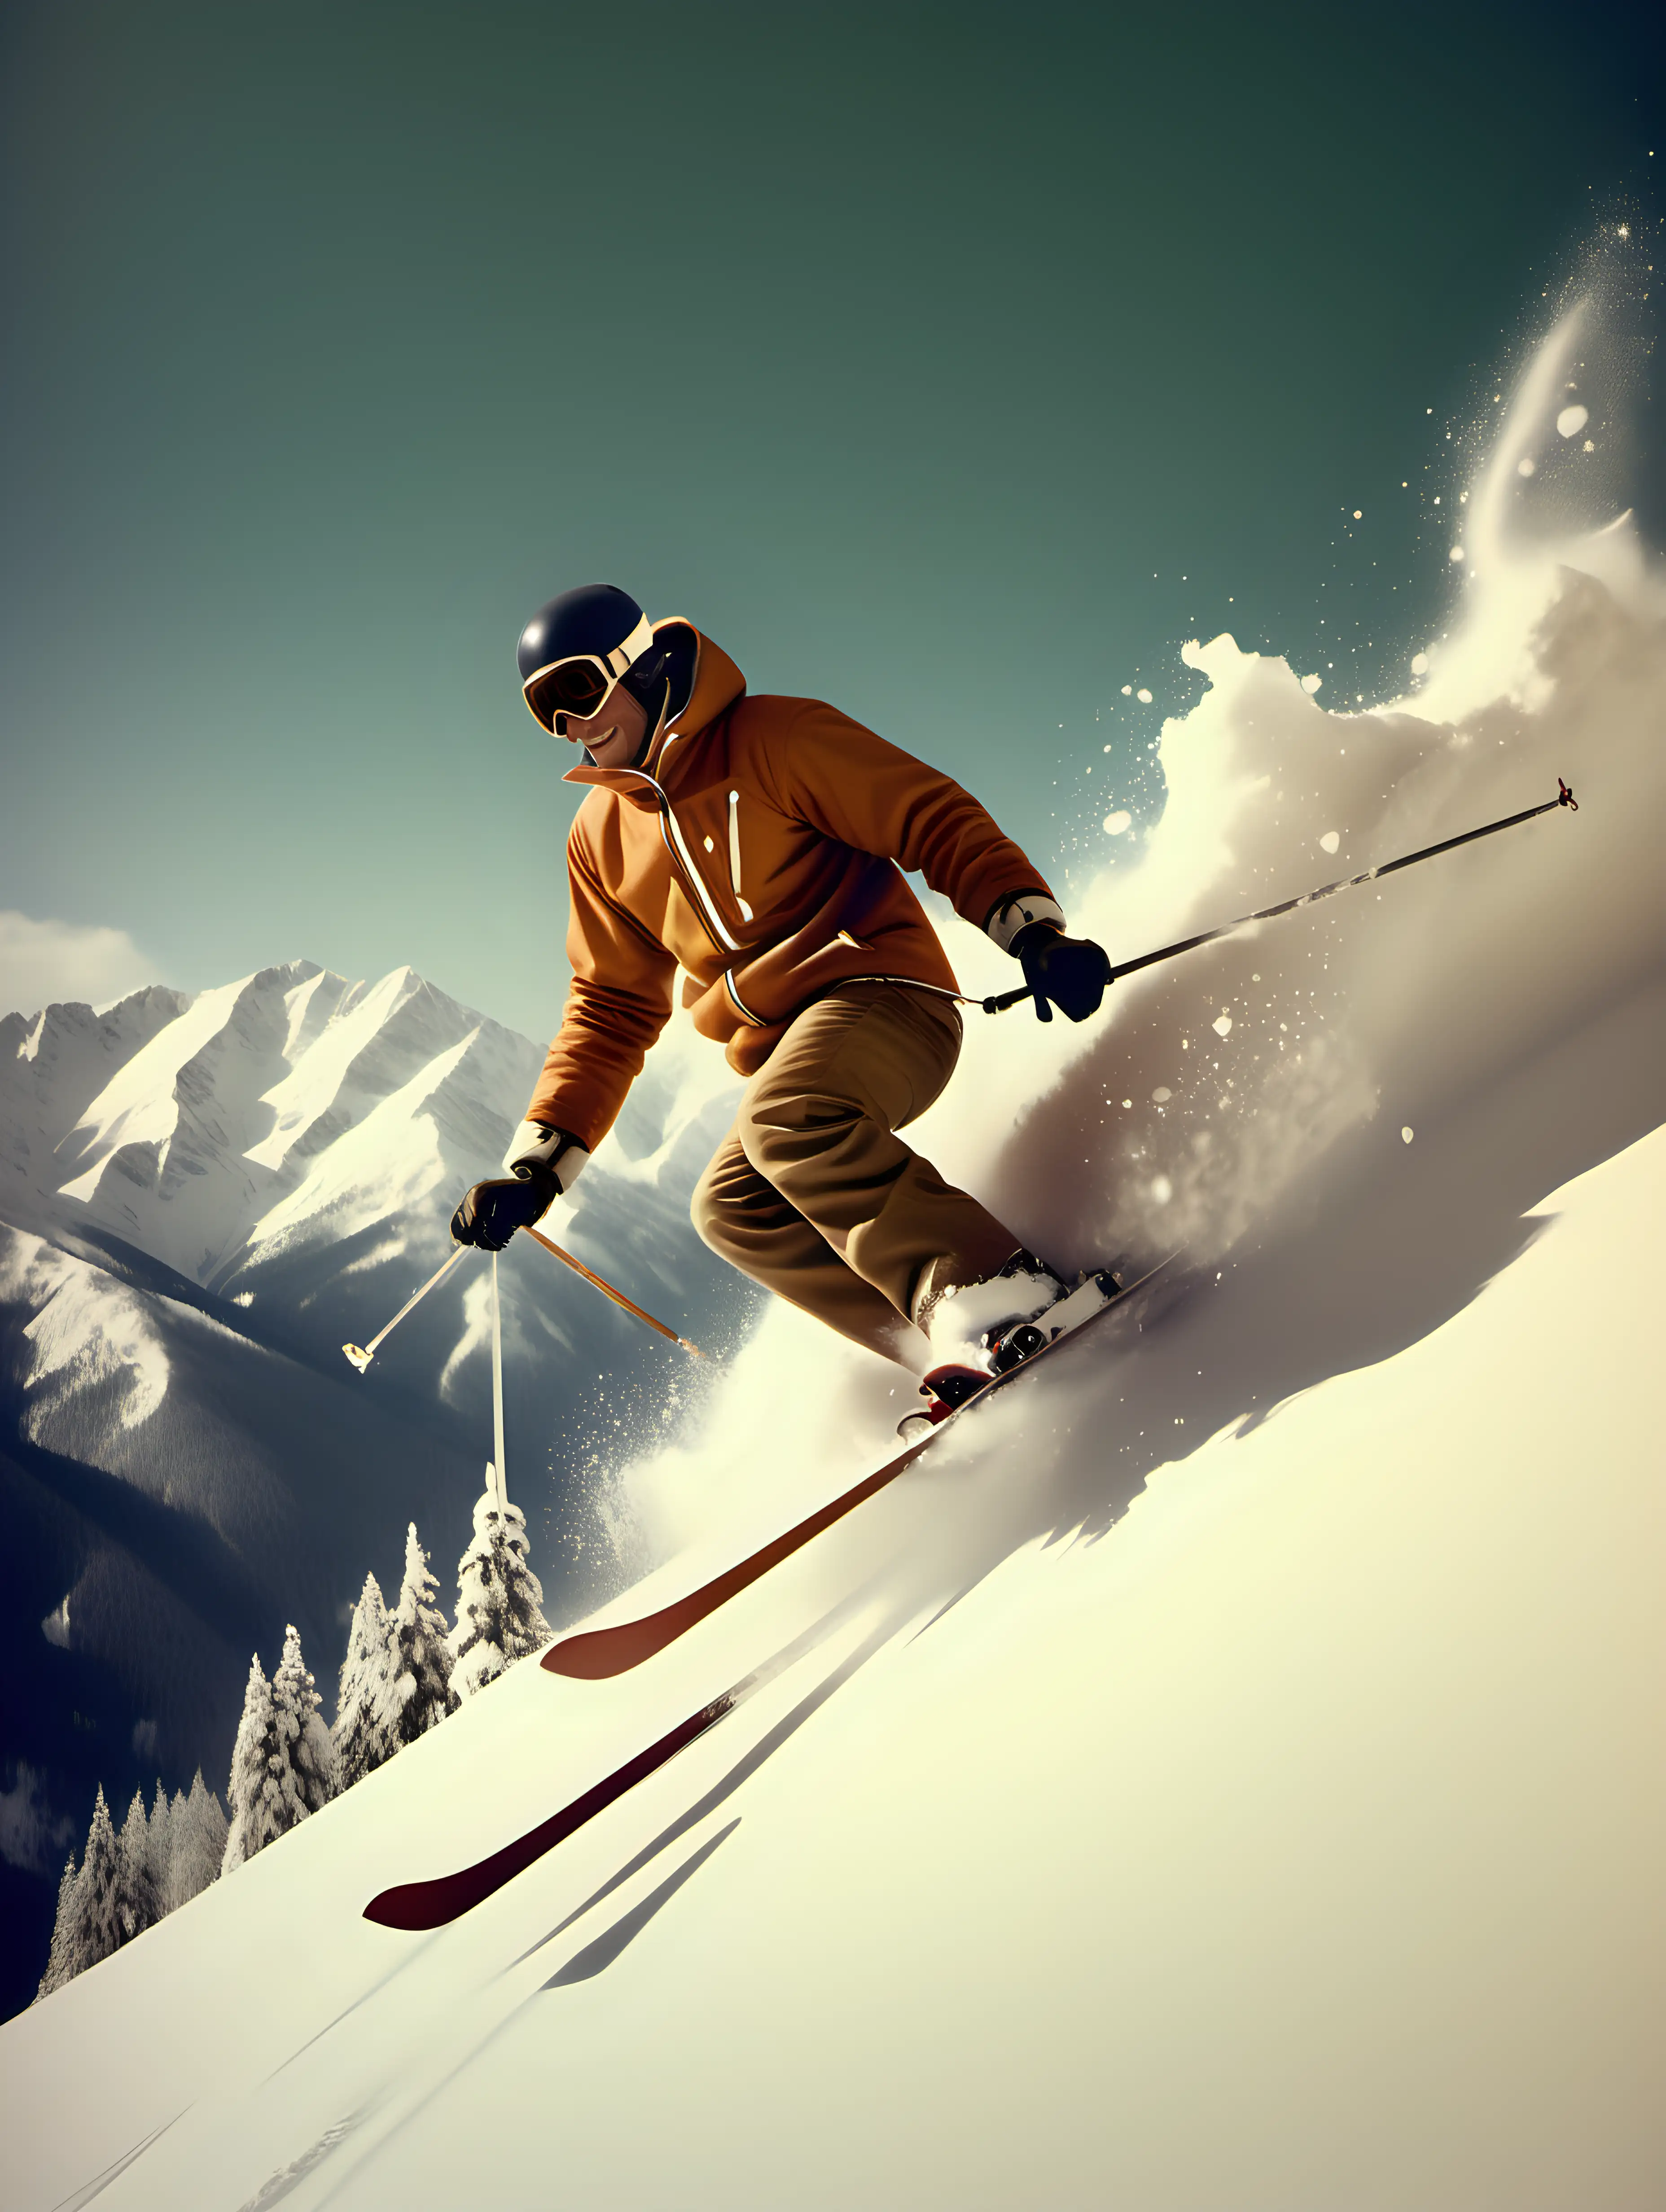 Thrilling 70s Ski Jump Skier Descending into Powdery Snow